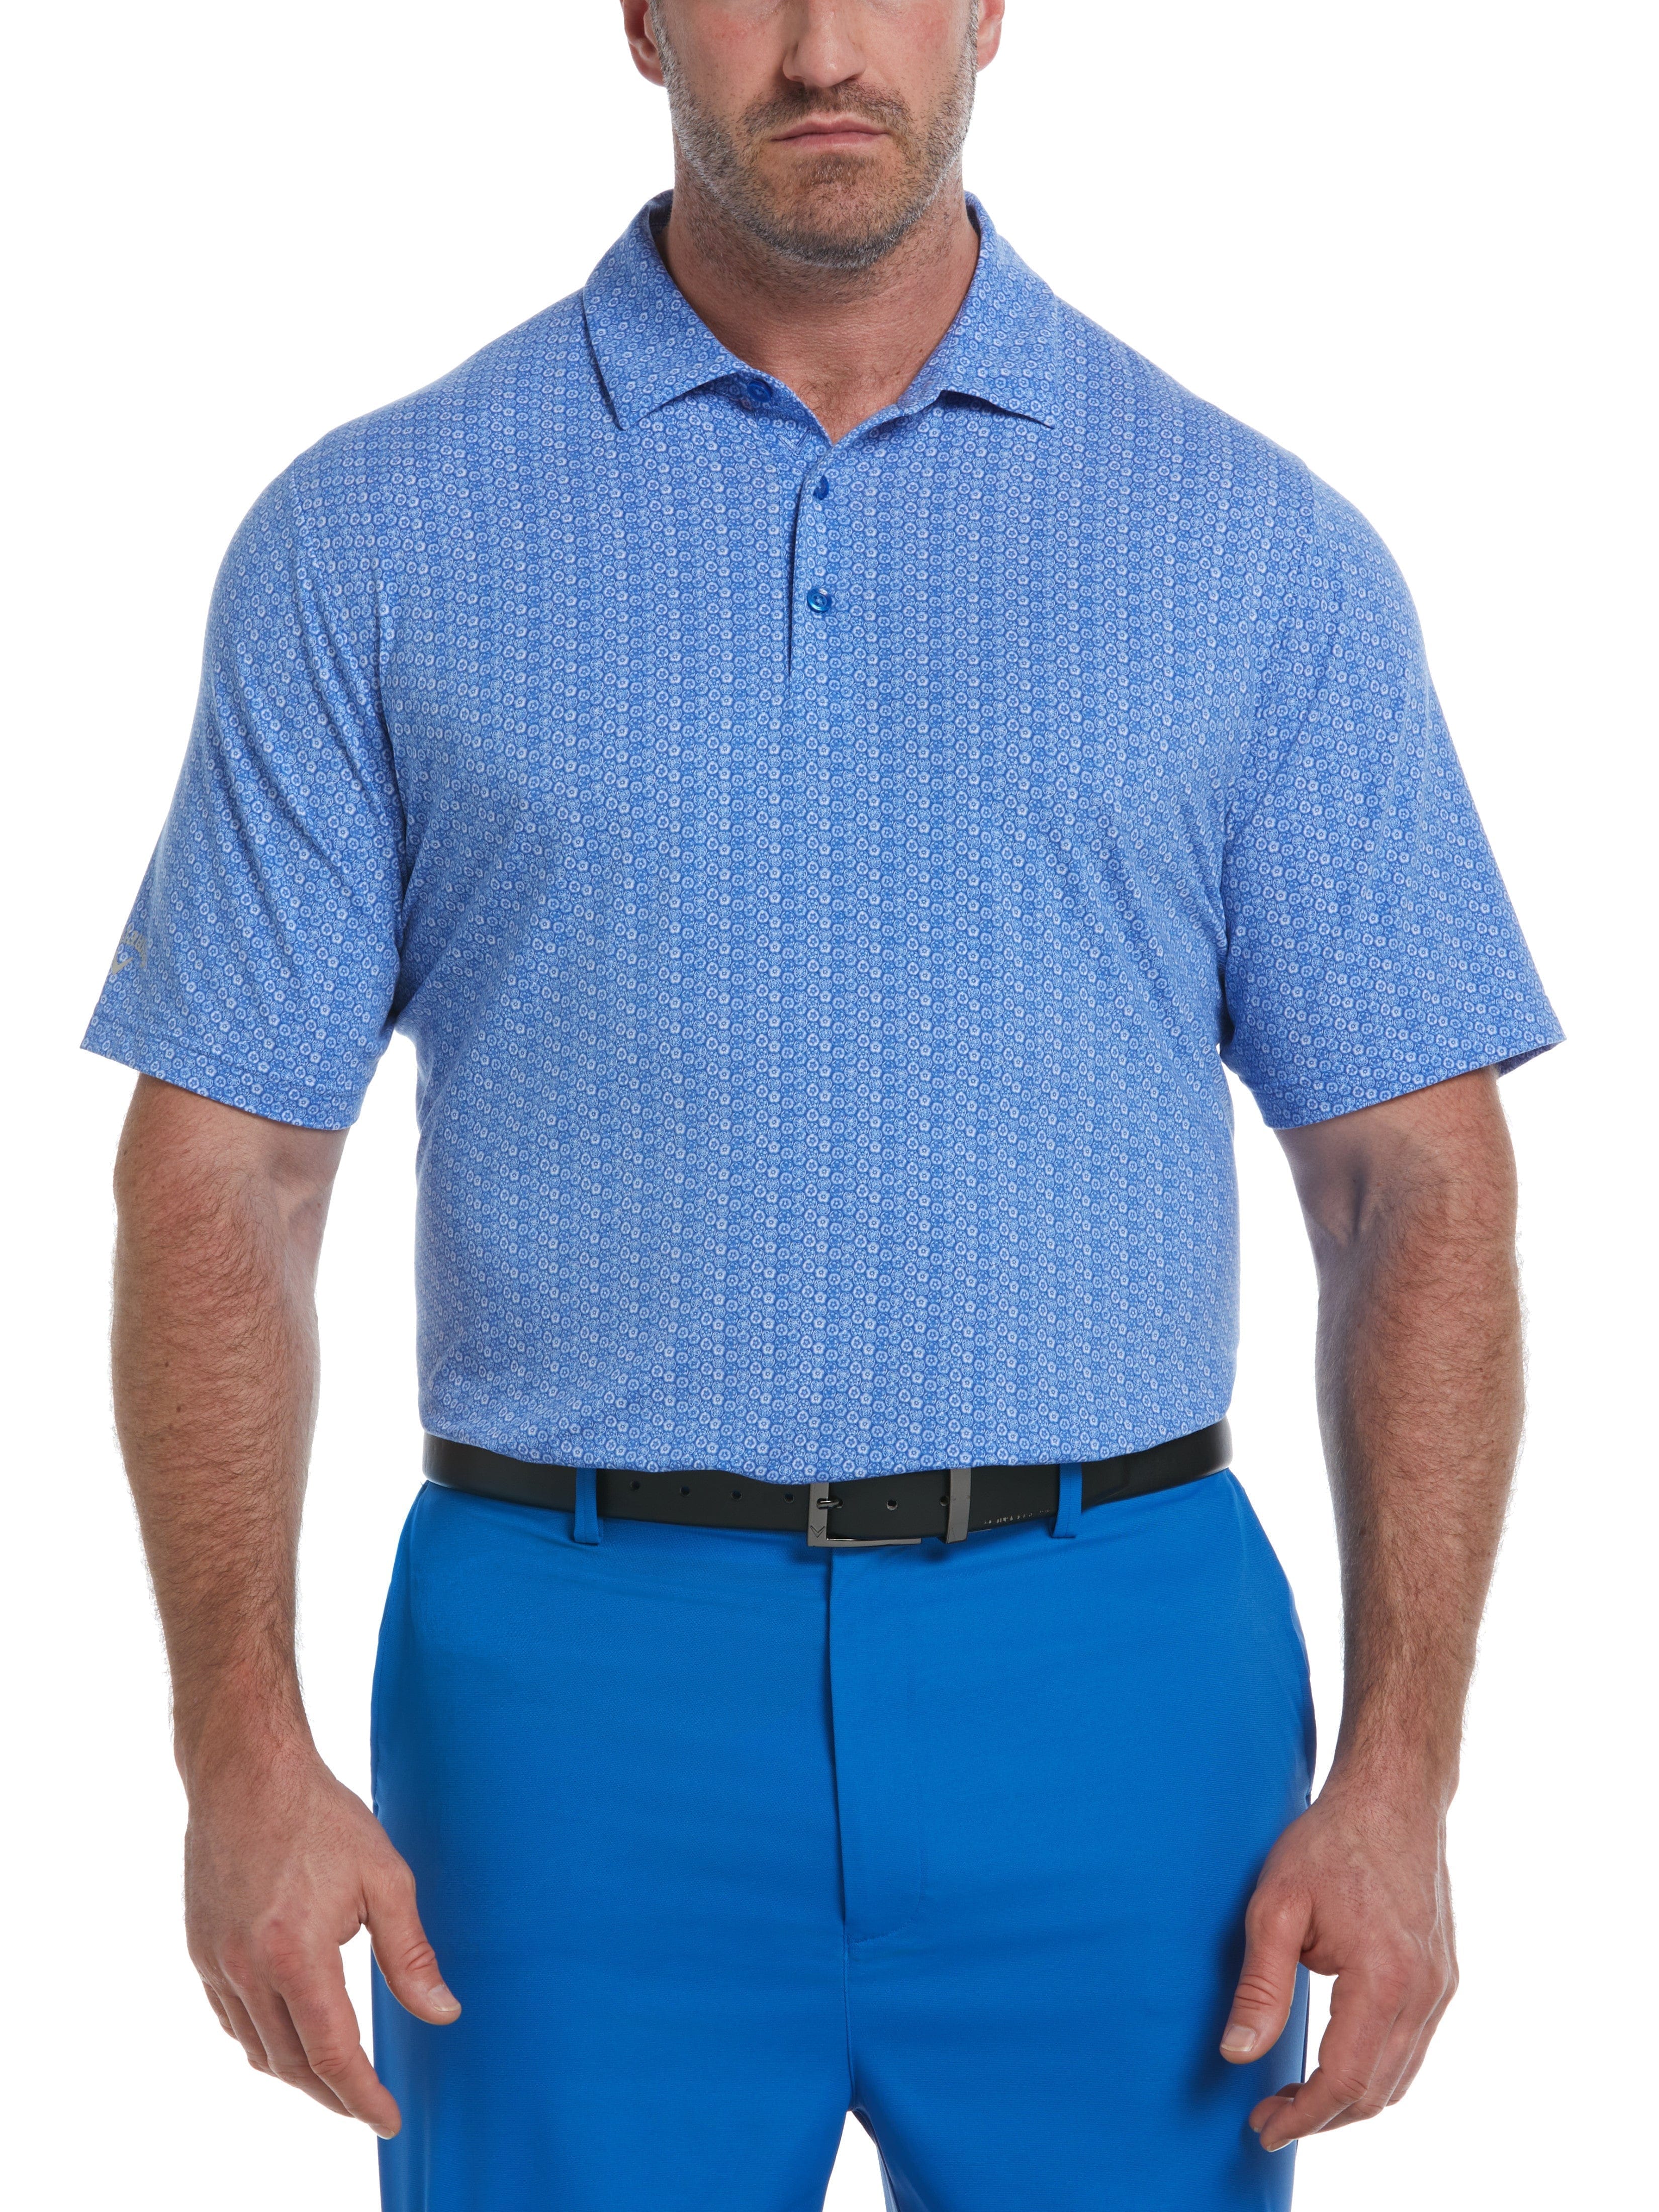 Callaway Apparel Mens Big & Tall Allover Tie Dye Foulard Print Golf Polo Shirt, Size 3X, Magnetic Blue, Polyester/Cotton/Elastane | Golf Apparel Shop